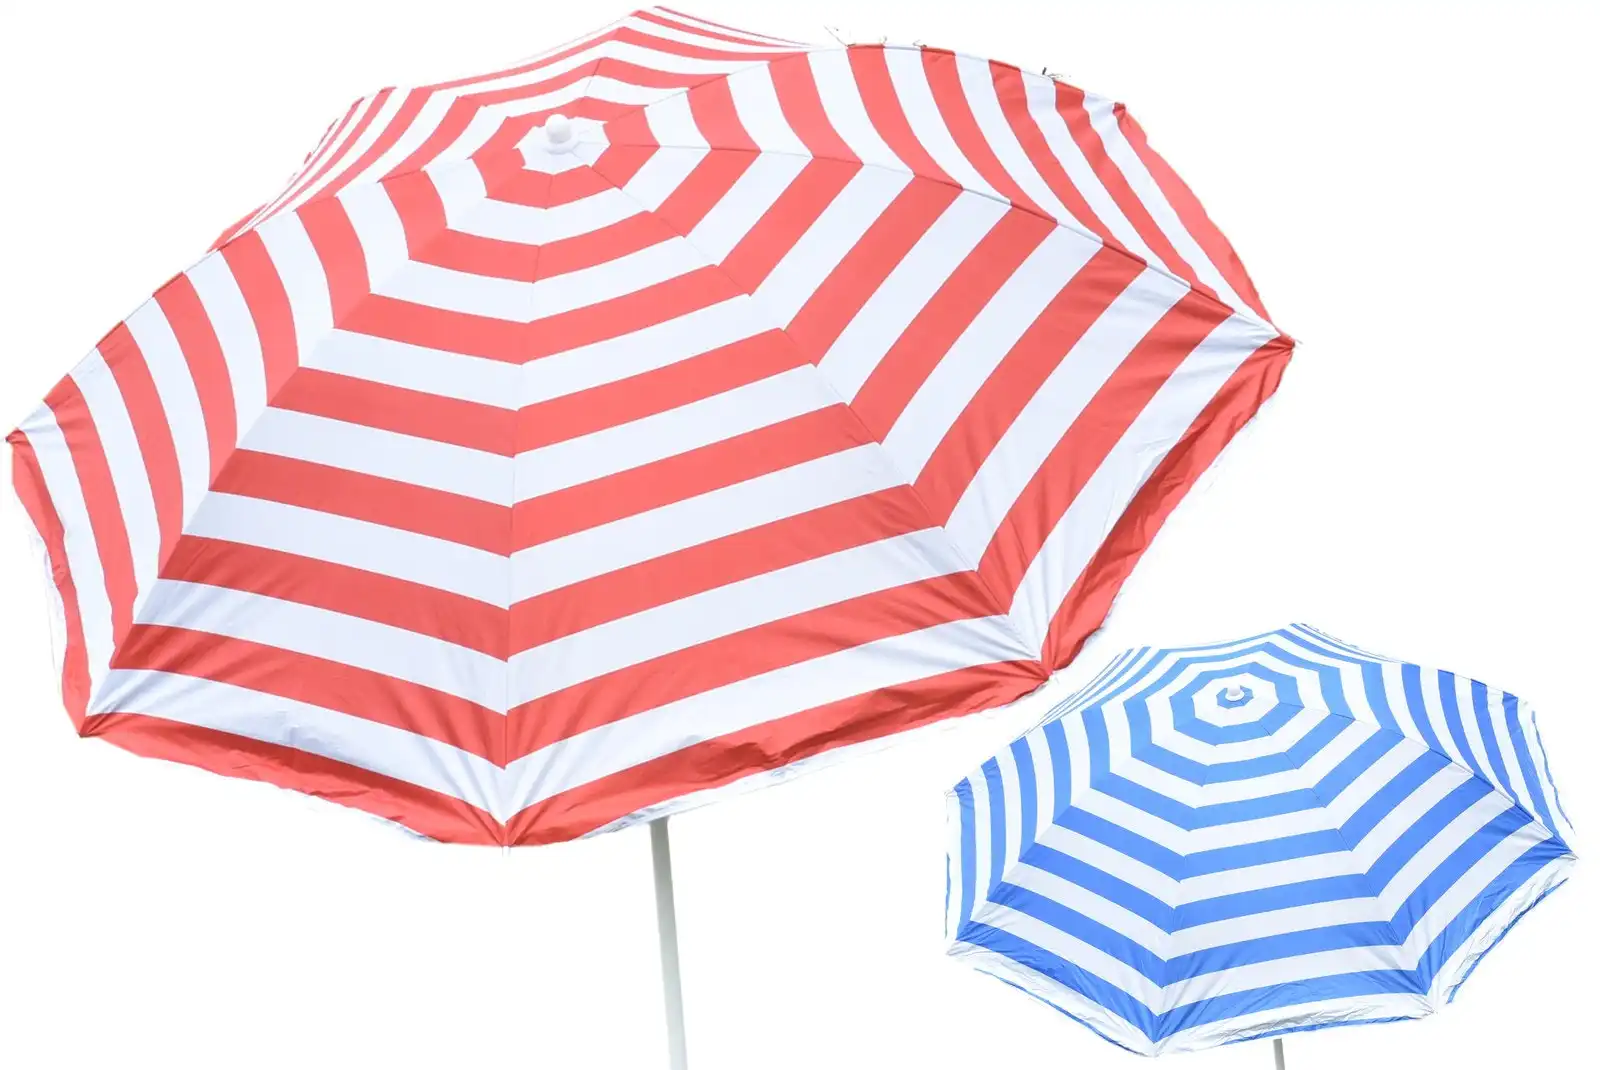 Beach Umbrella with Tilt